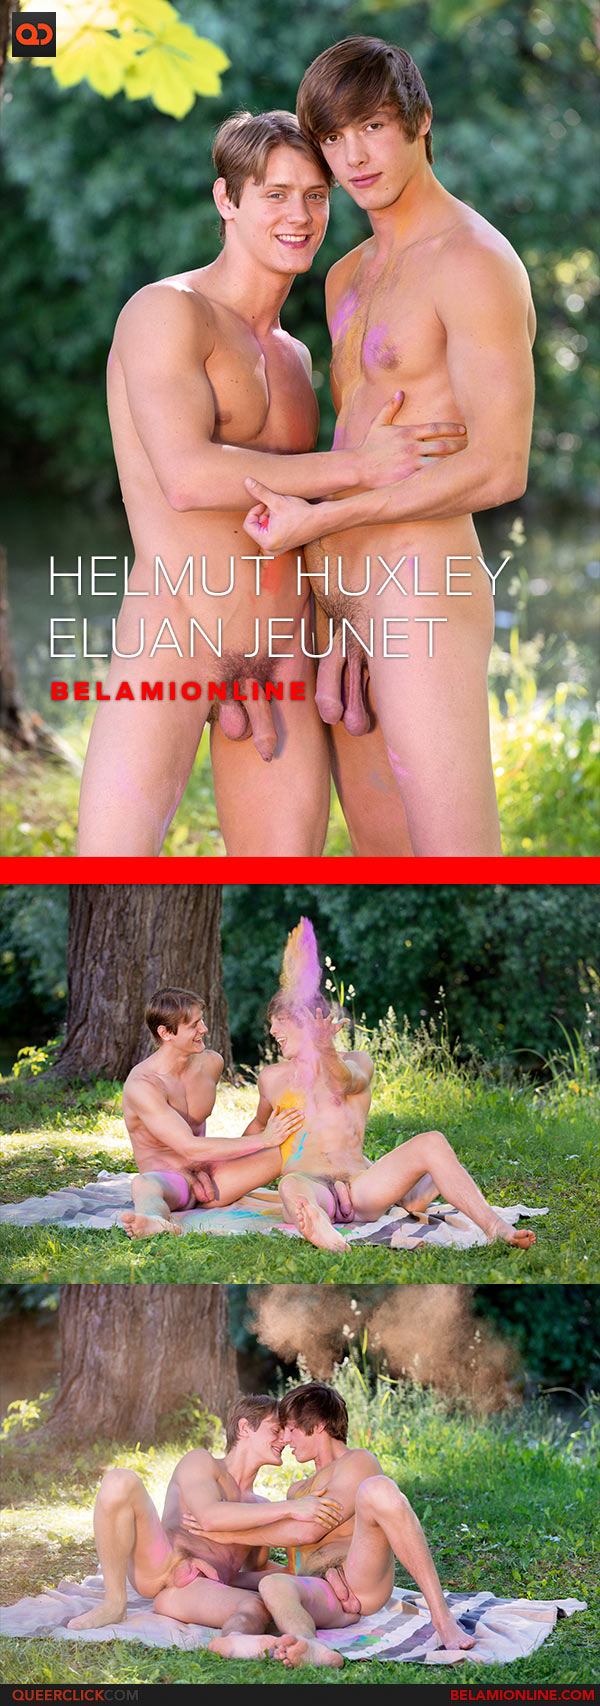 BelAmi Online: Helmut Huxley and Eluan Jeunet - Art Collection